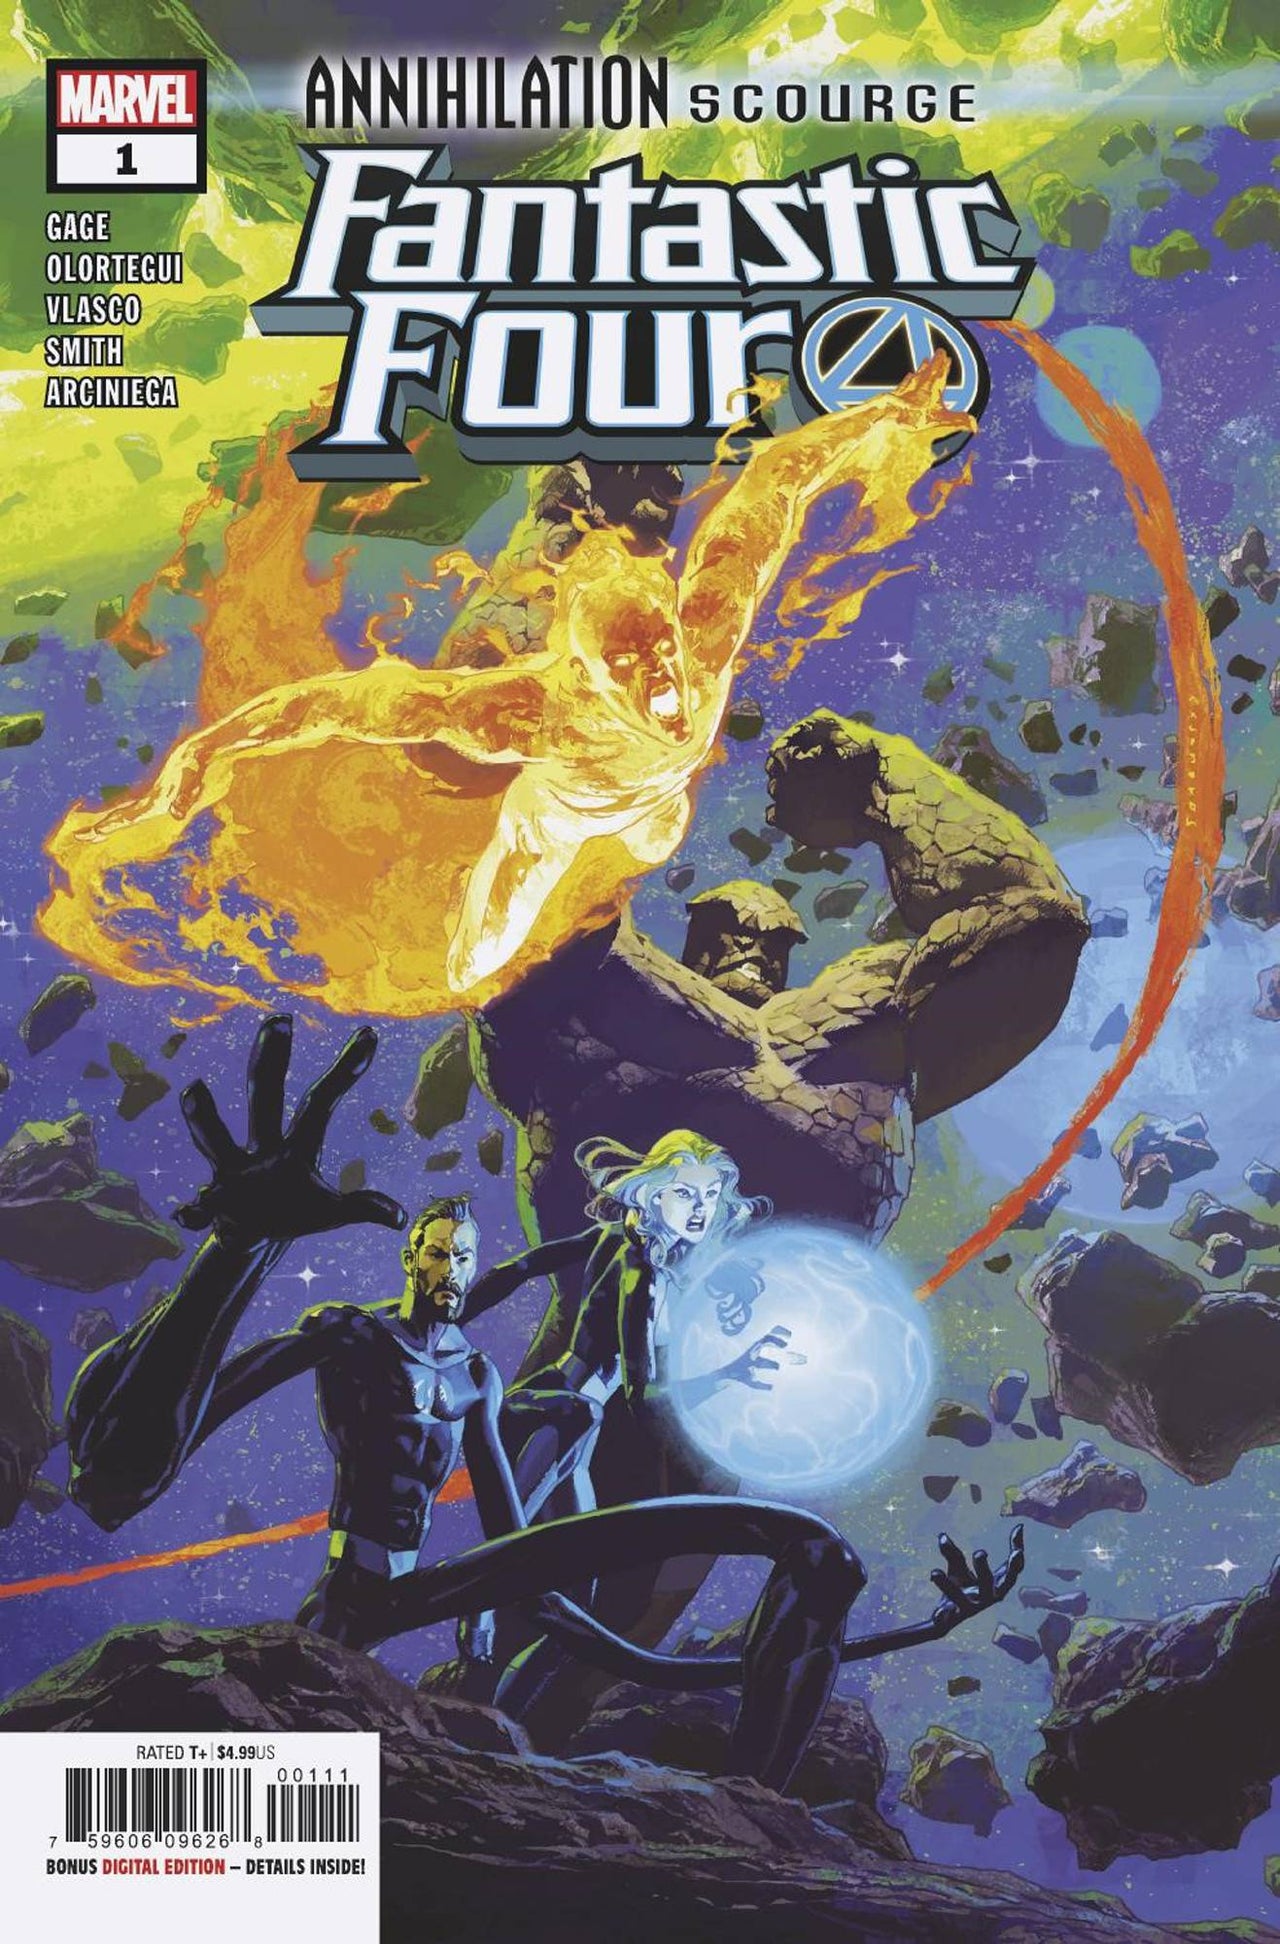 Annihilation: Scourge - Fantastic Four  Vol. 1 #1